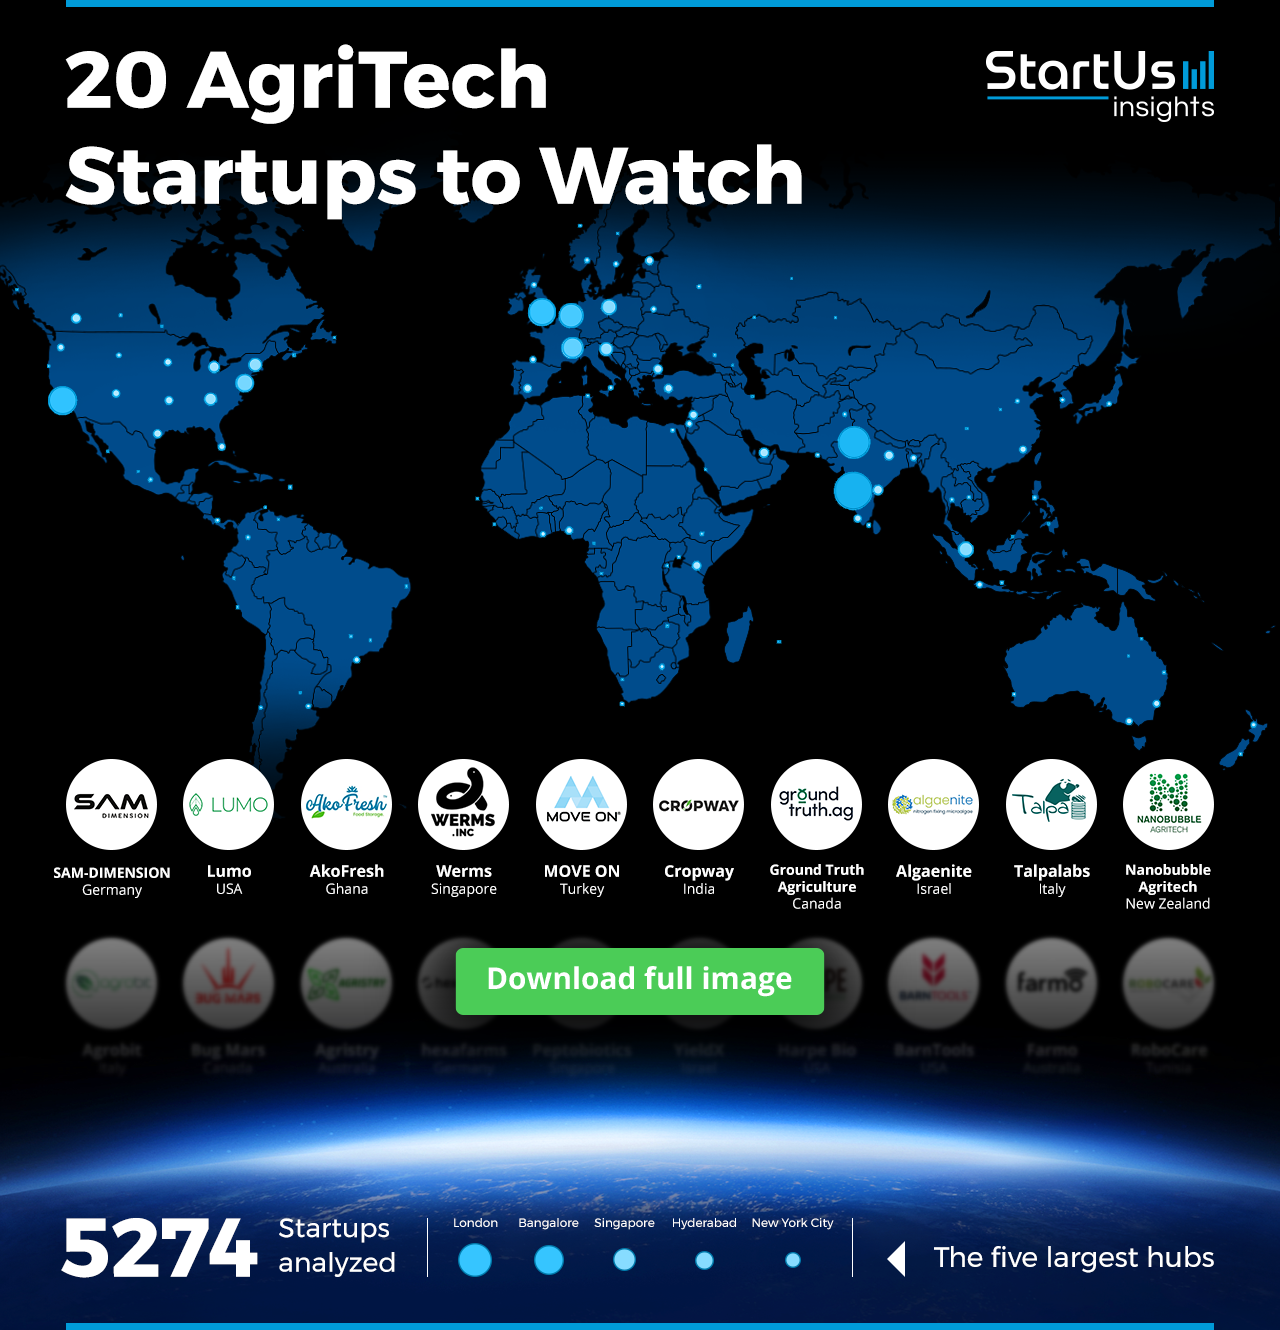 AgriTech-Startups-to-Watch-Heat-Map-Blurred-StartUs-Insights-noresize